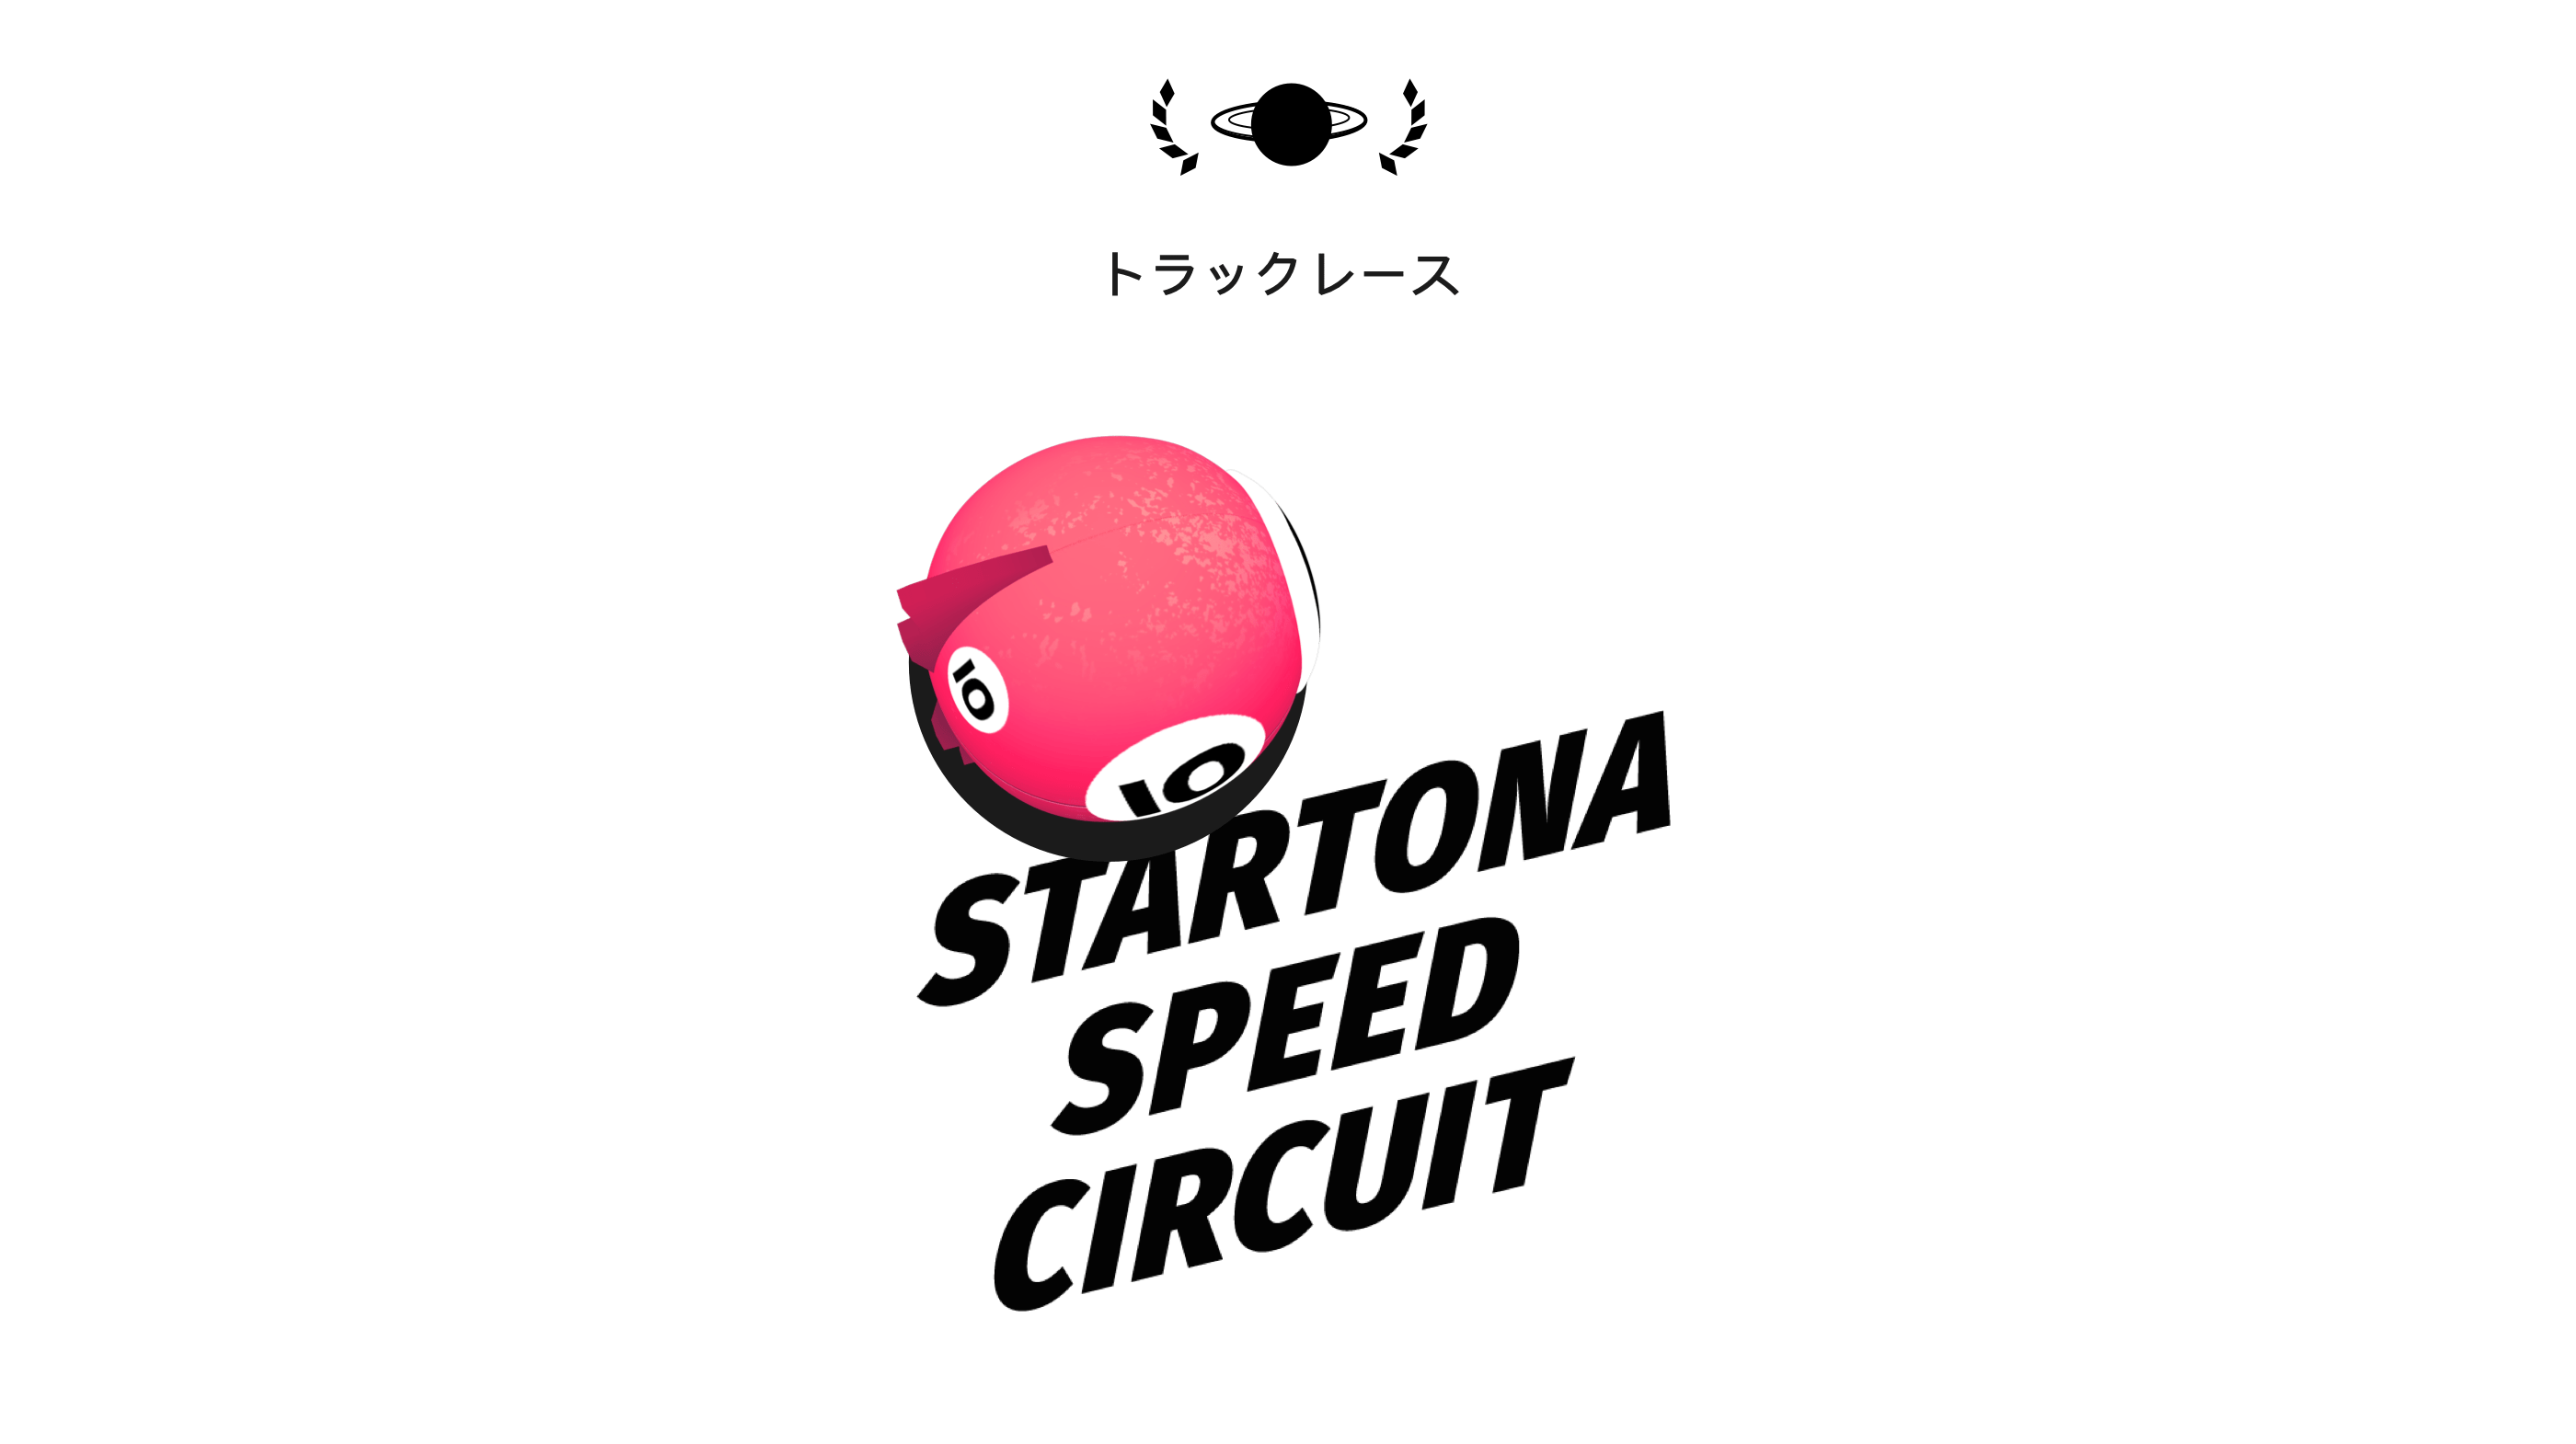 Startona Speed Circuit announcement image